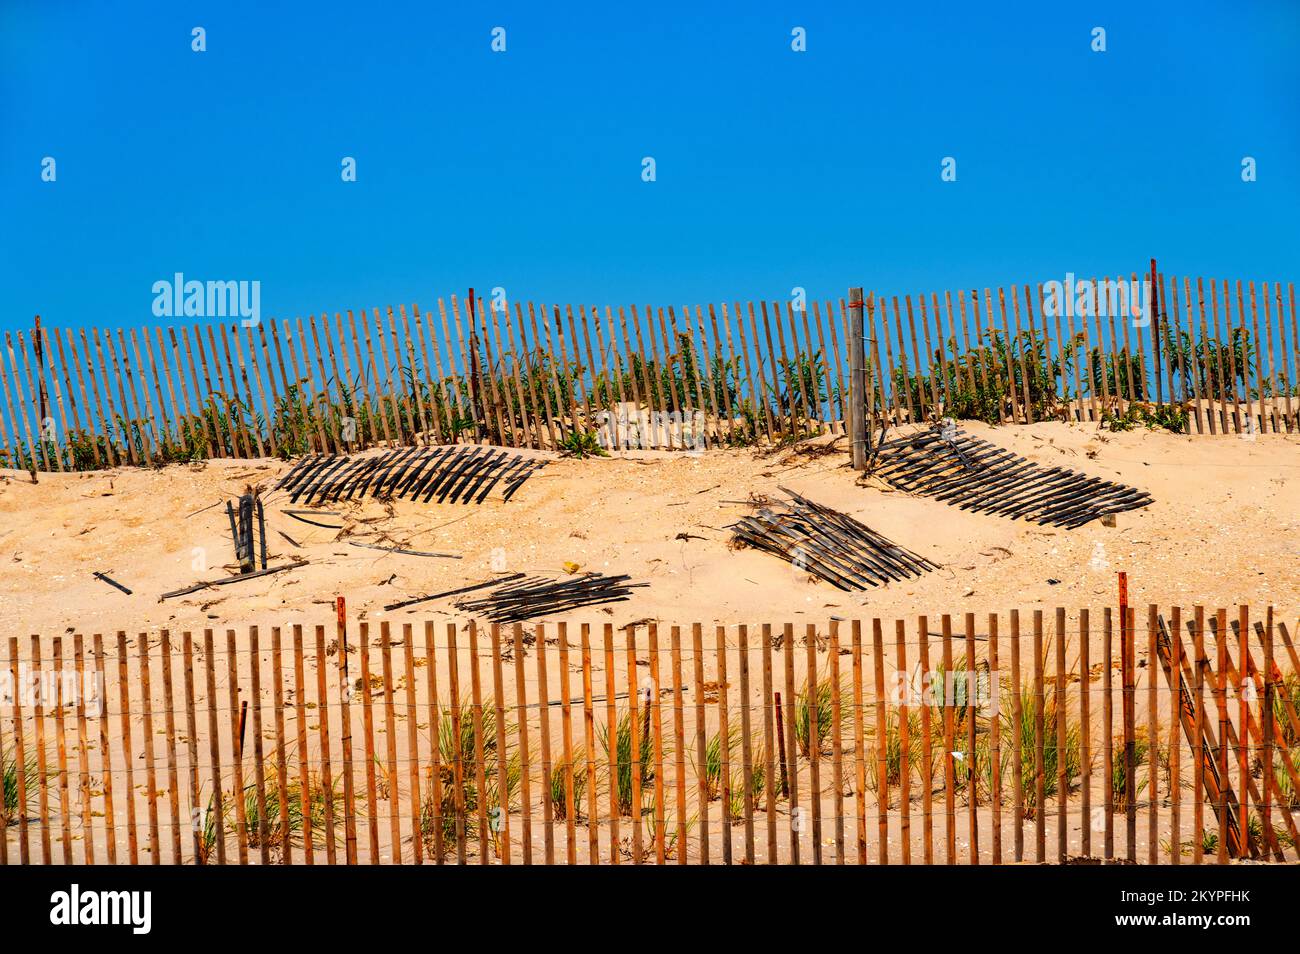 Picket fences on a sandy beach Stock Photo